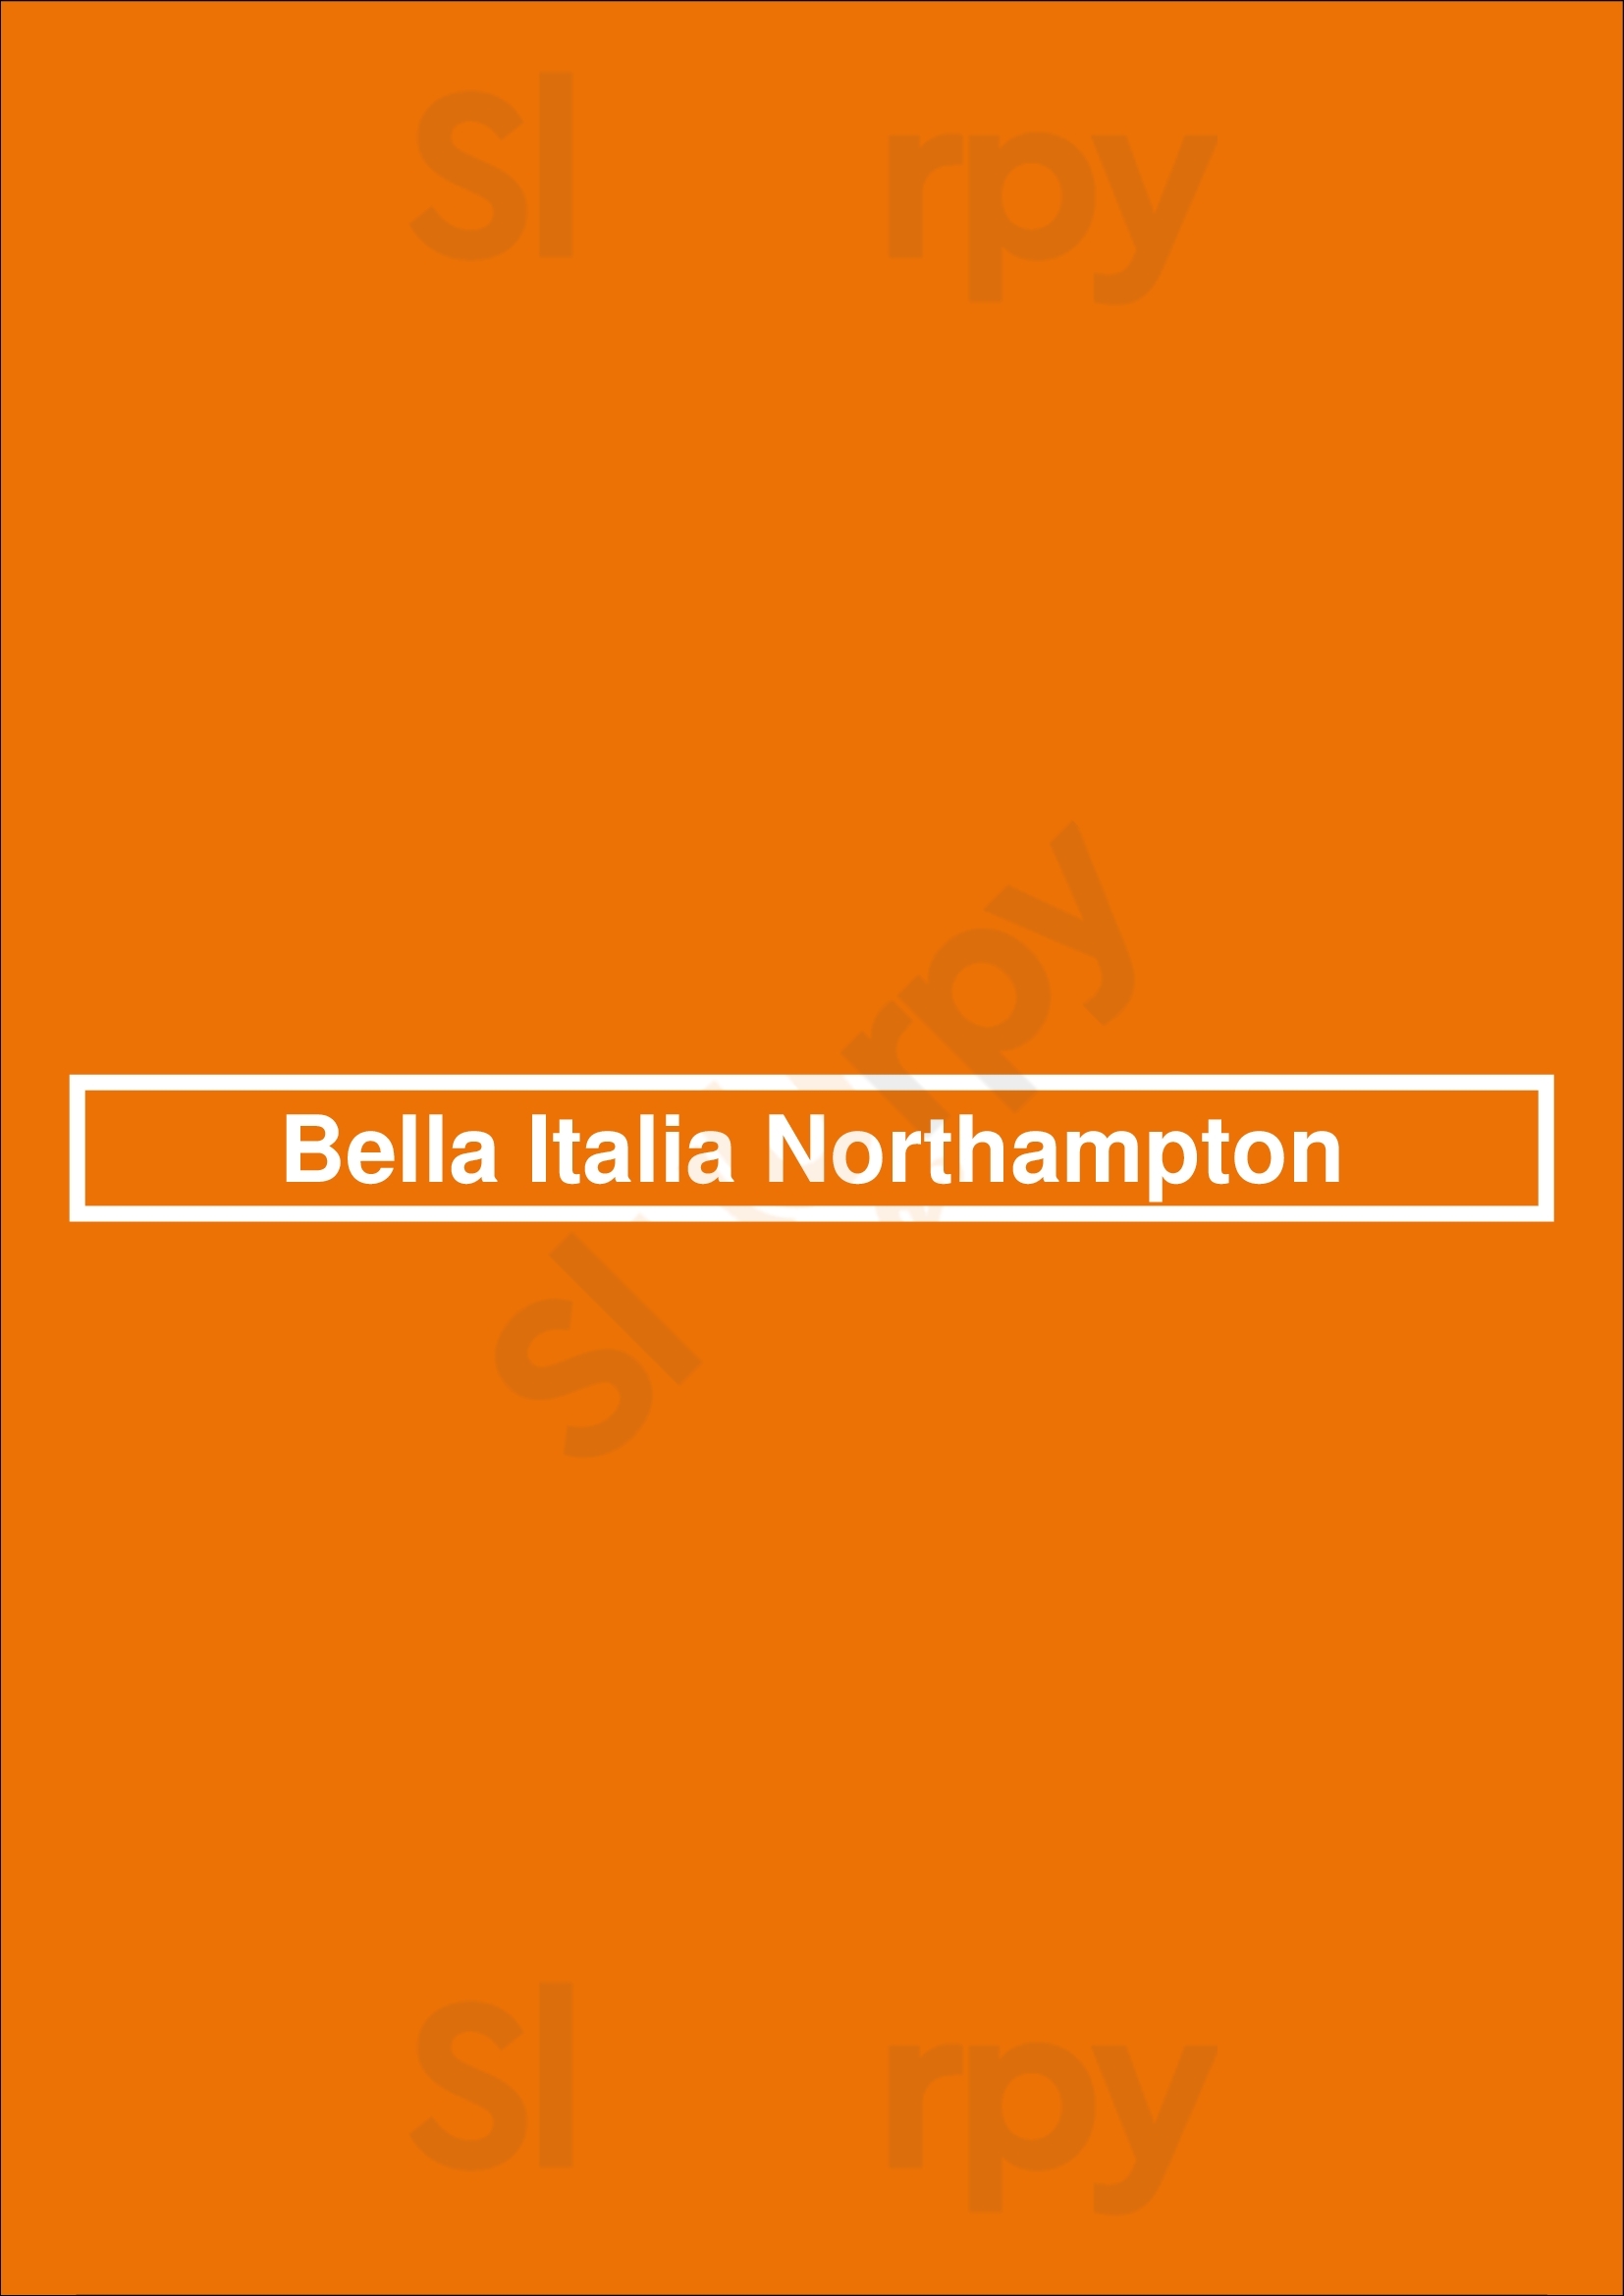 Bella Italia Northampton Northampton Menu - 1